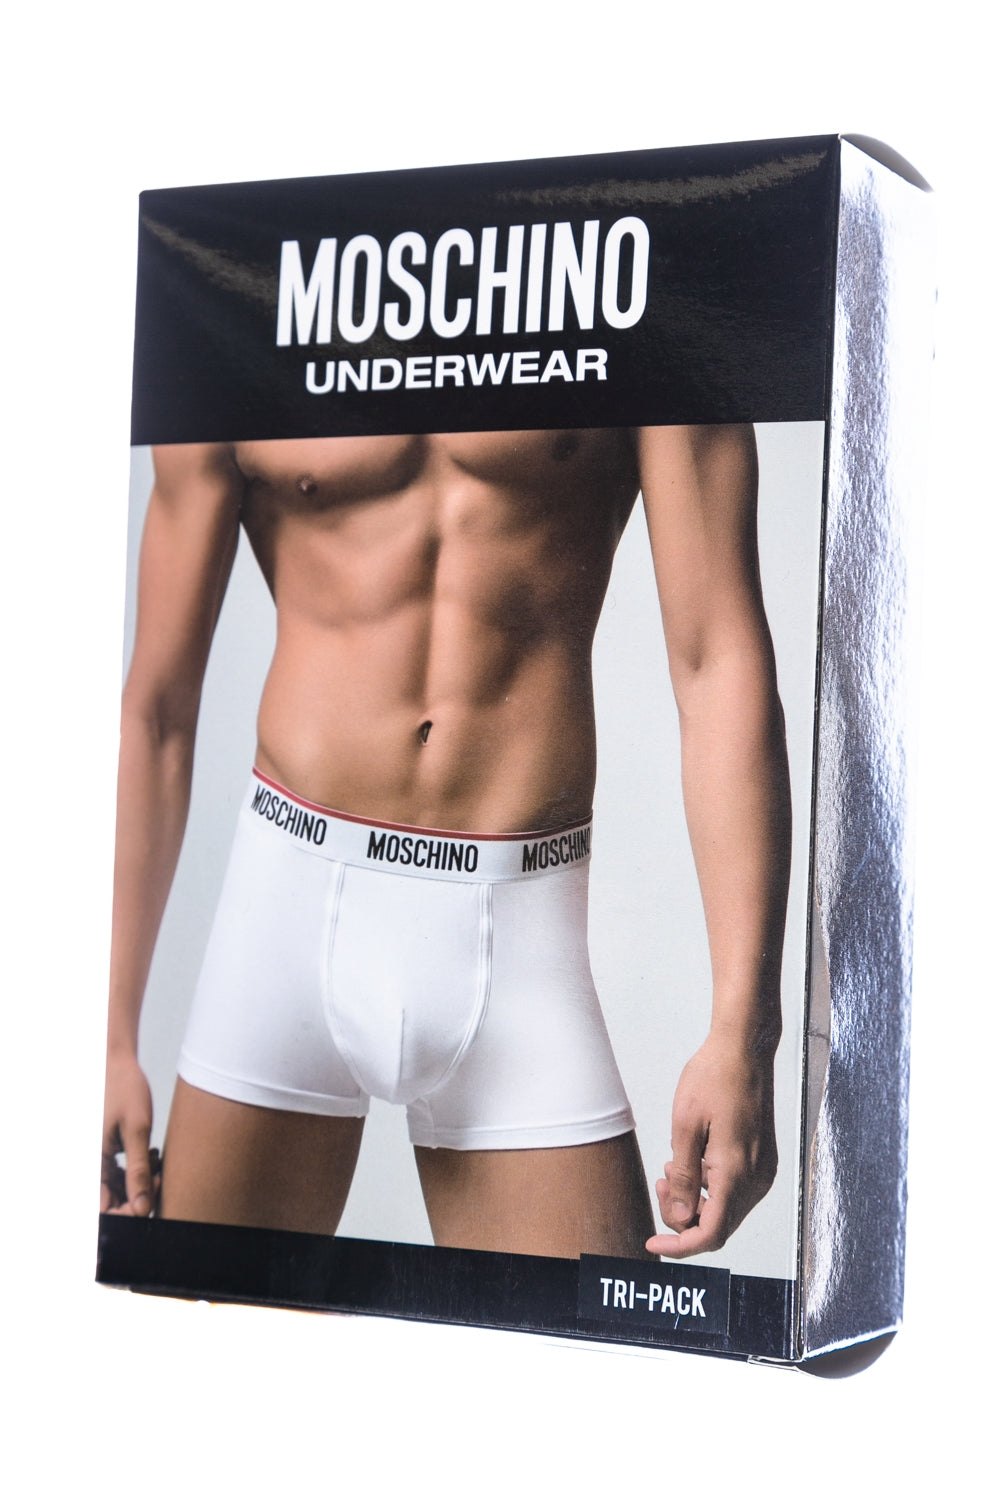 Moschino Underwear Tri Pack Boxers in Black, White & Grey Box